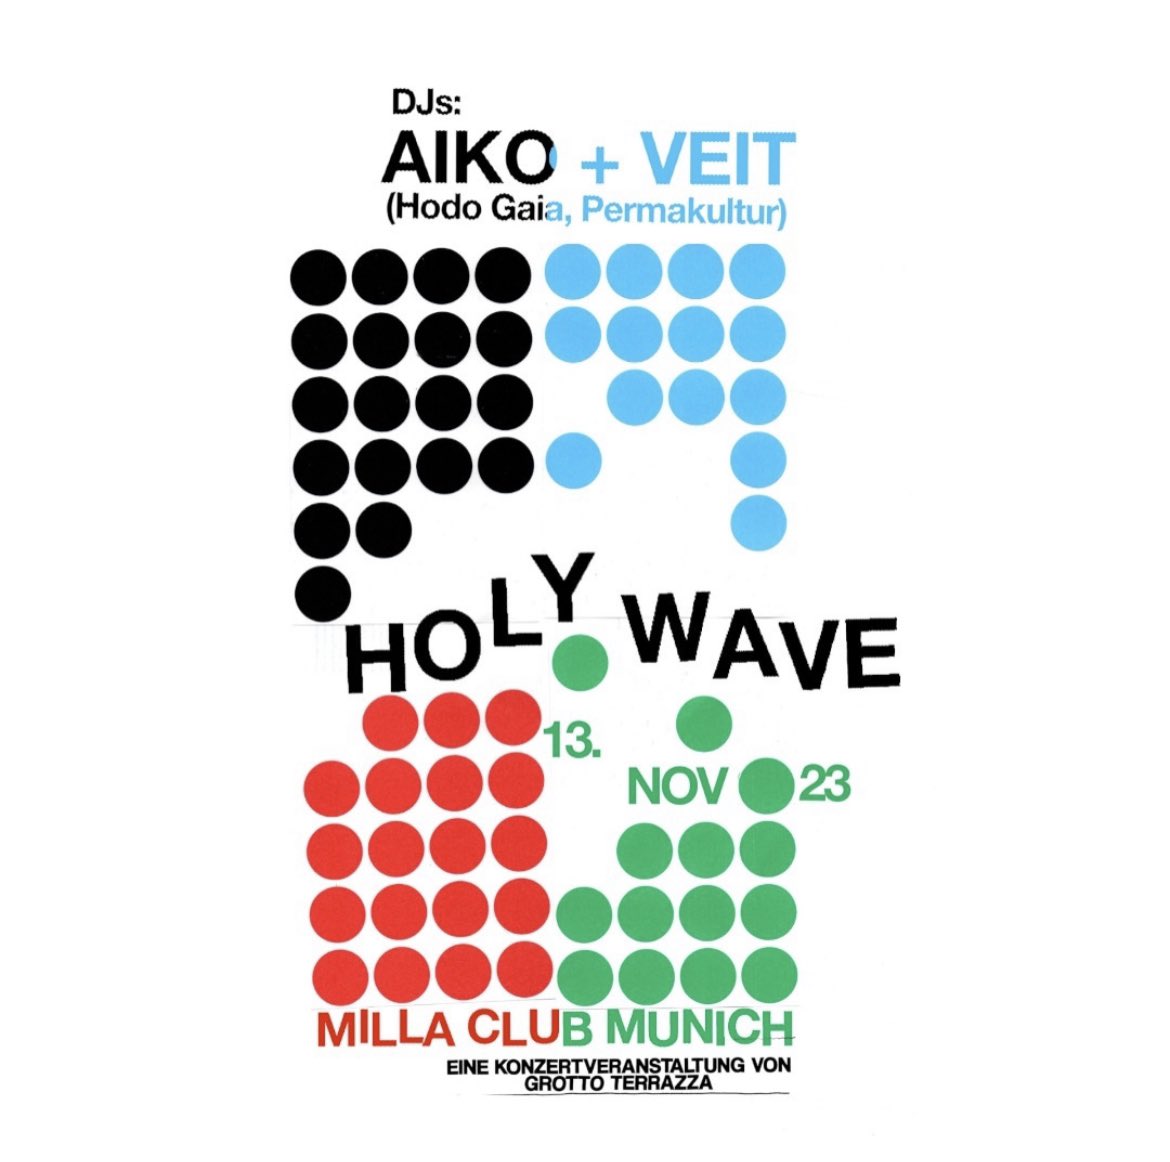 ❤️🖤TONIGHT IN MUNICH🩵💚 Catch @Holy_Wave at Milla Club